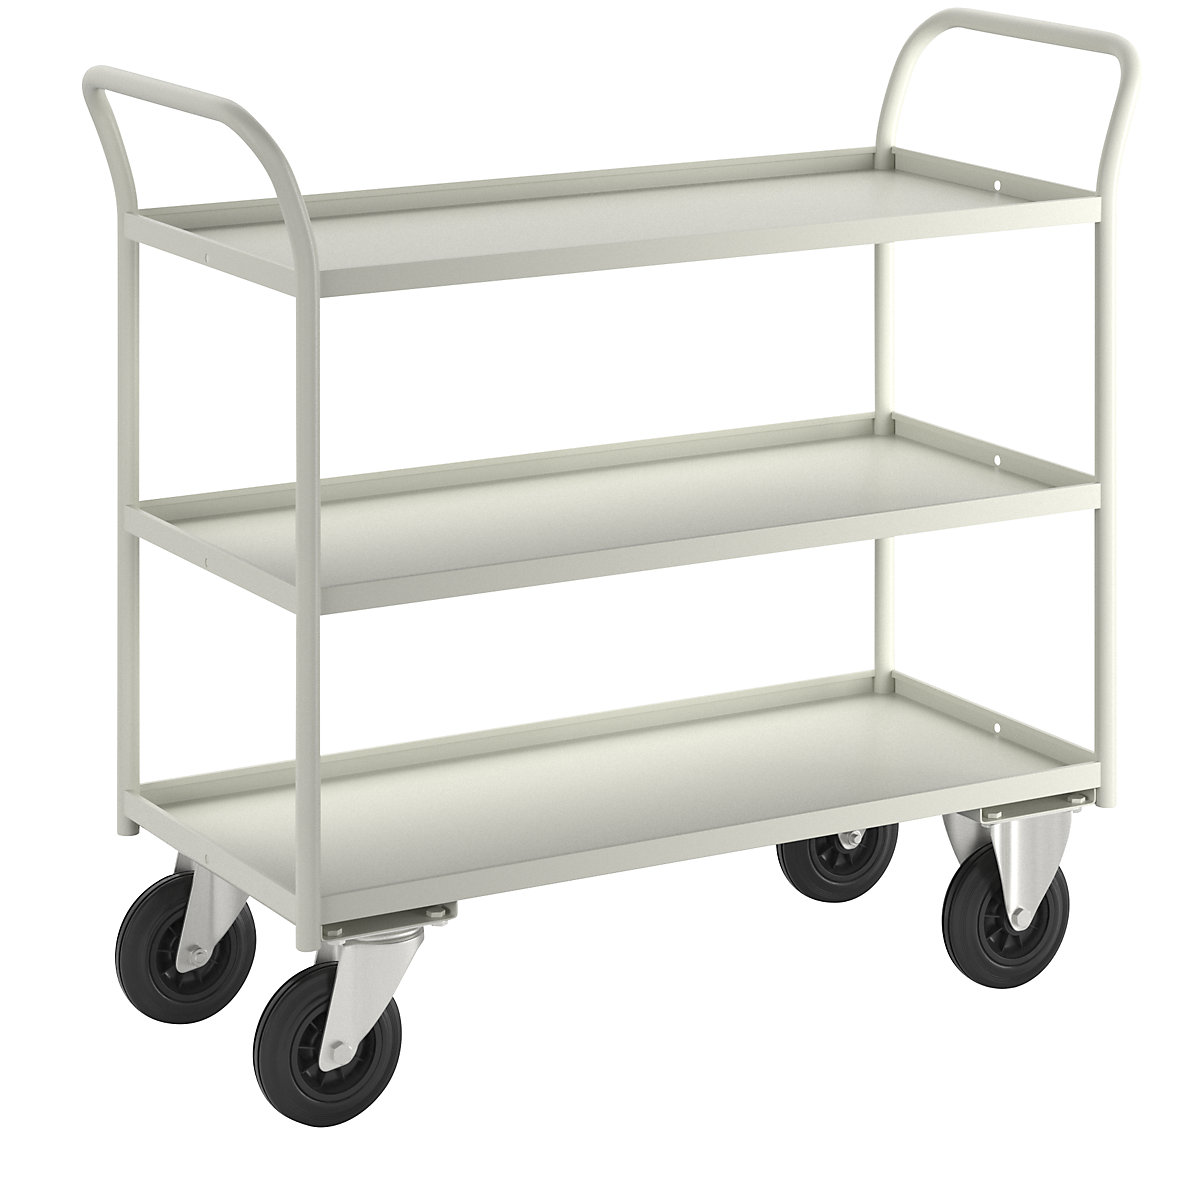 KM41 table trolley – Kongamek, 3 shelves with raised edges, LxWxH 1080 x 450 x 1000 mm, white, 2 swivel castors and 2 fixed castors-7